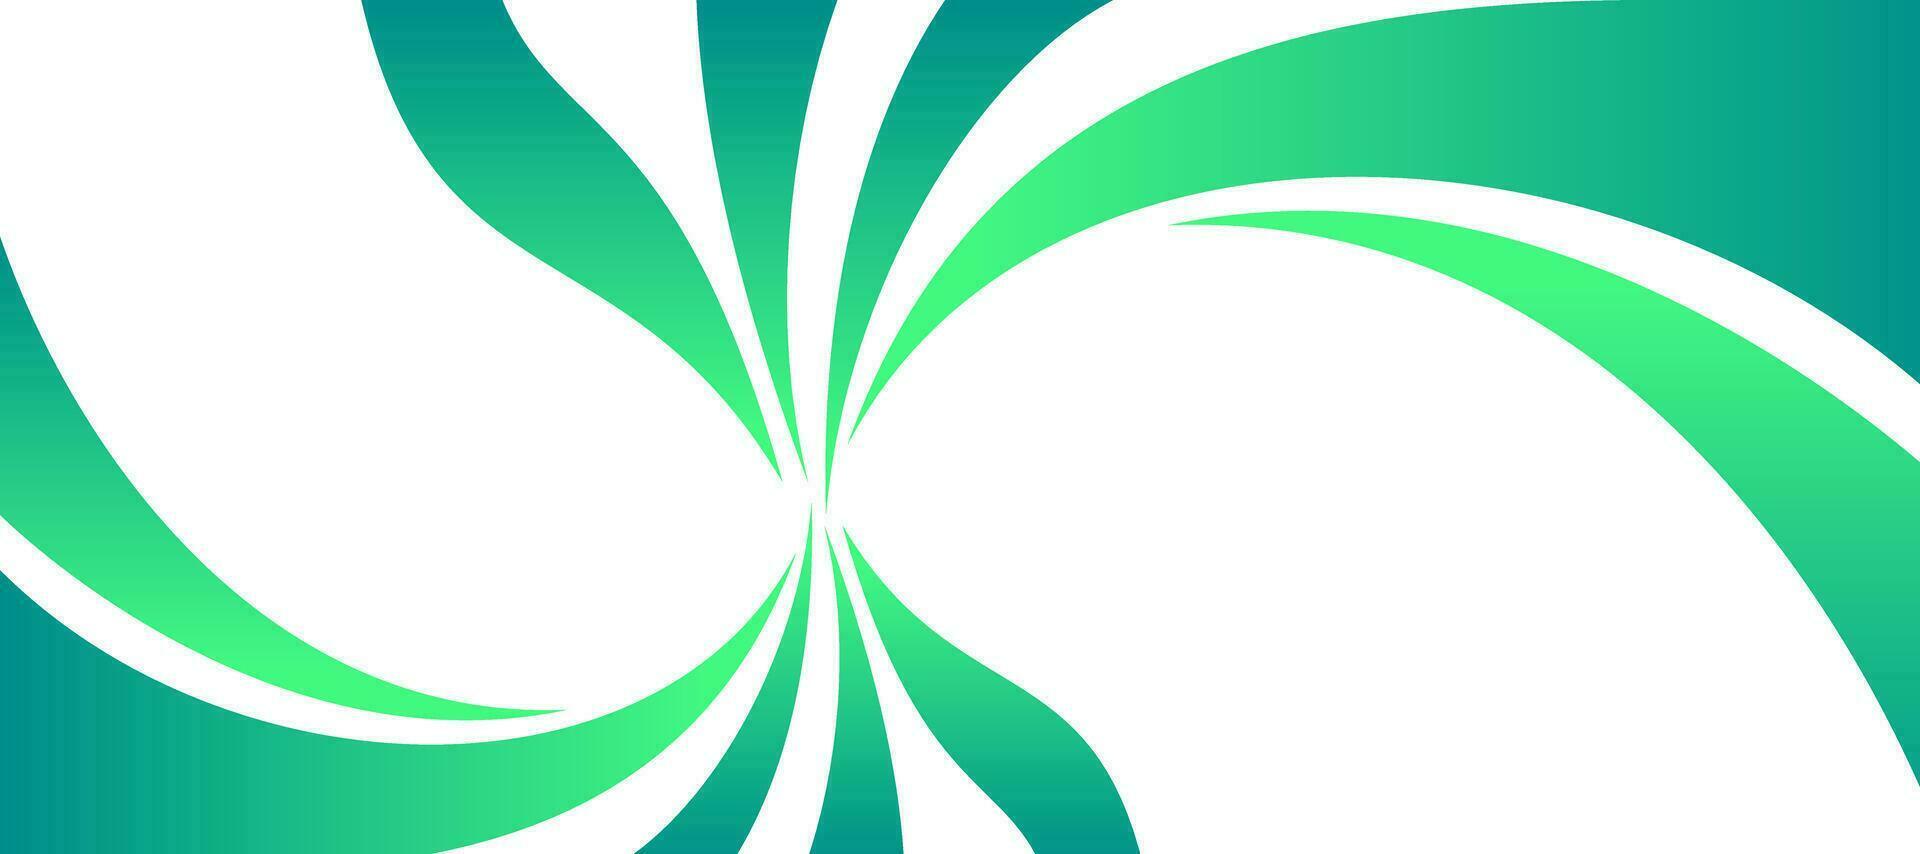 verde degradado circular curva olas bandera folleto volantes diseño antecedentes vector